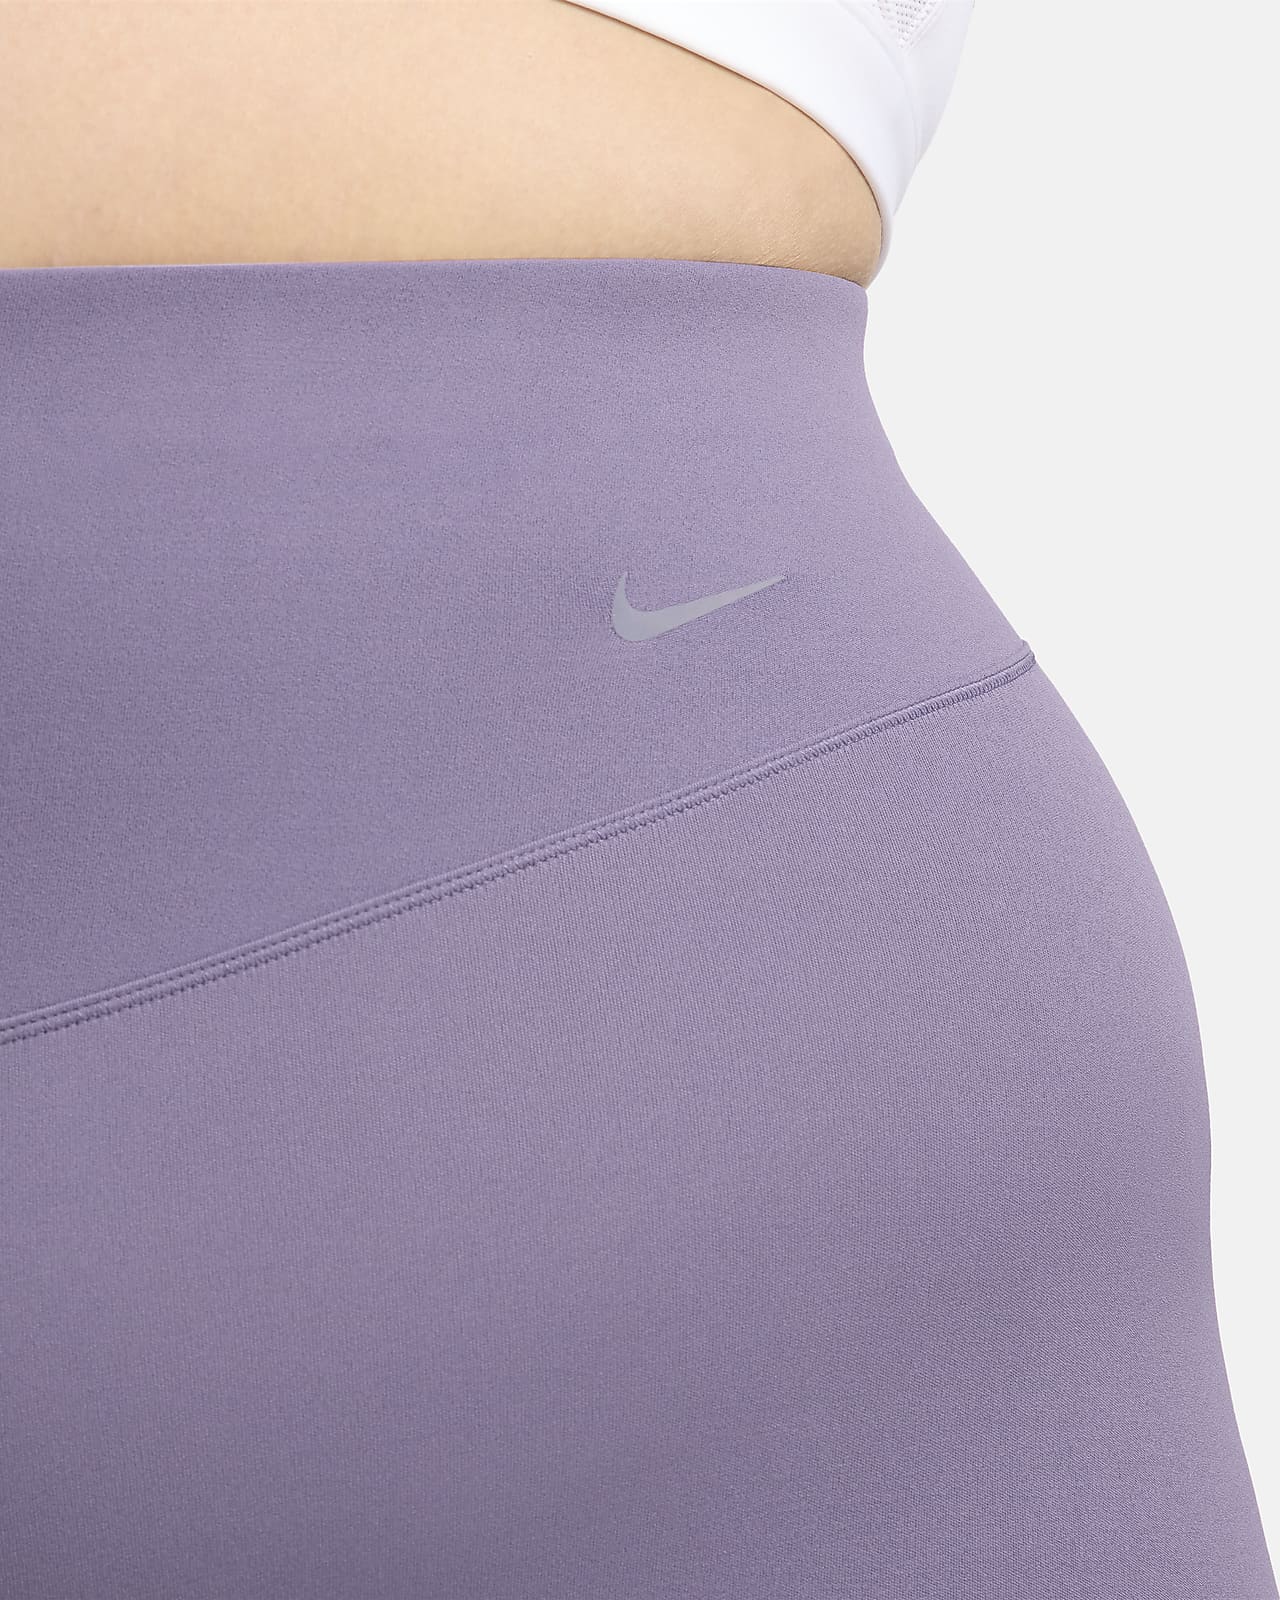 Nike Zenvy Women's Gentle-Support High-Waisted 8 Biker Shorts (Plus Size).